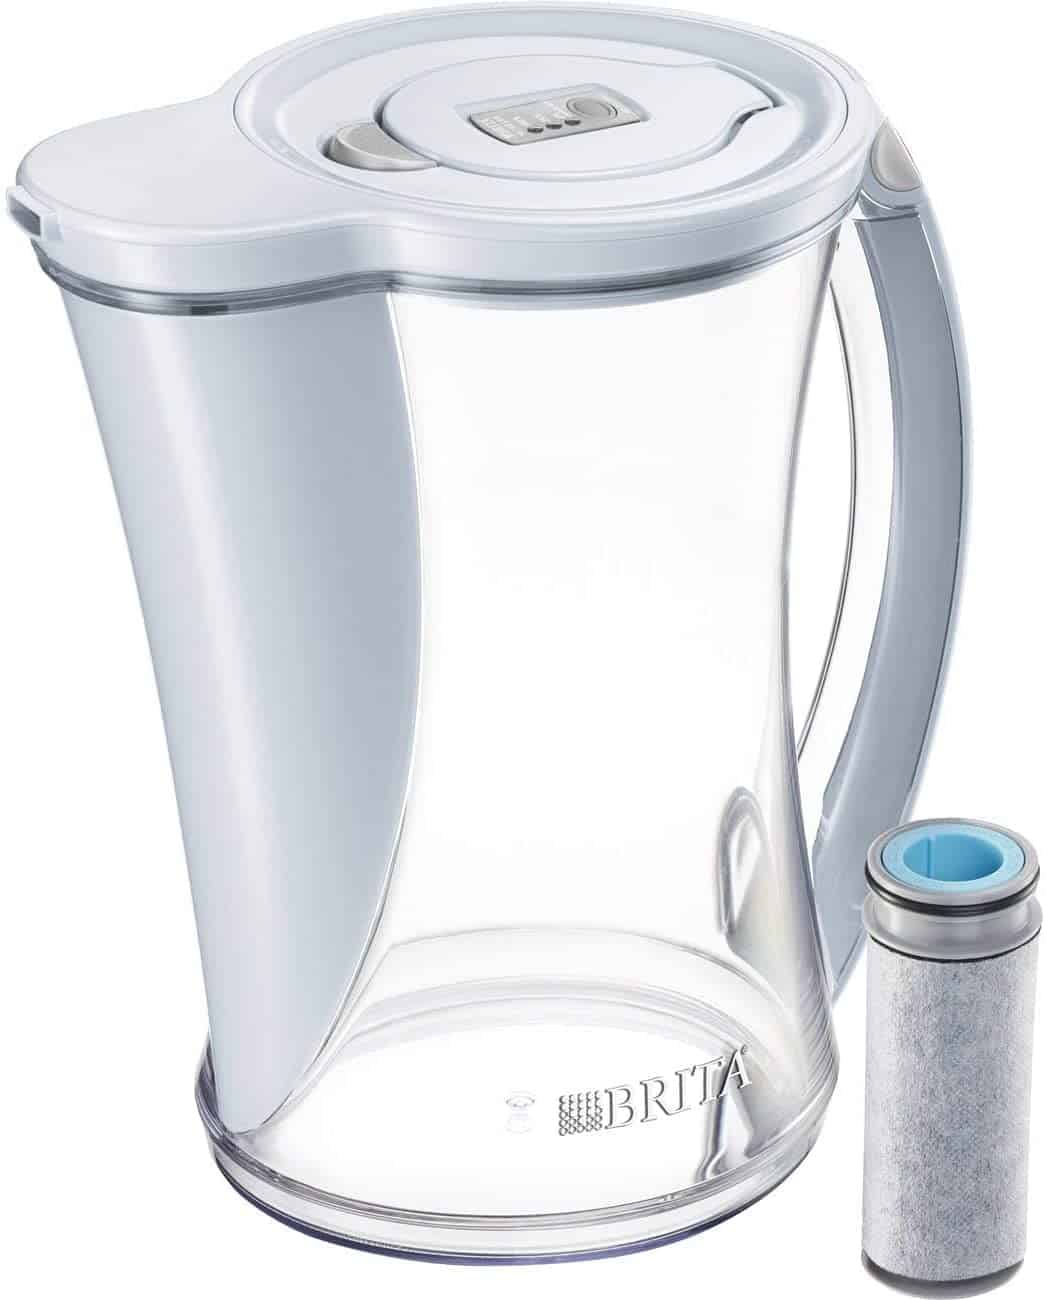 Brita Stream Water Pitcher with 1 Filter 12 Cup Ice Brand Brita